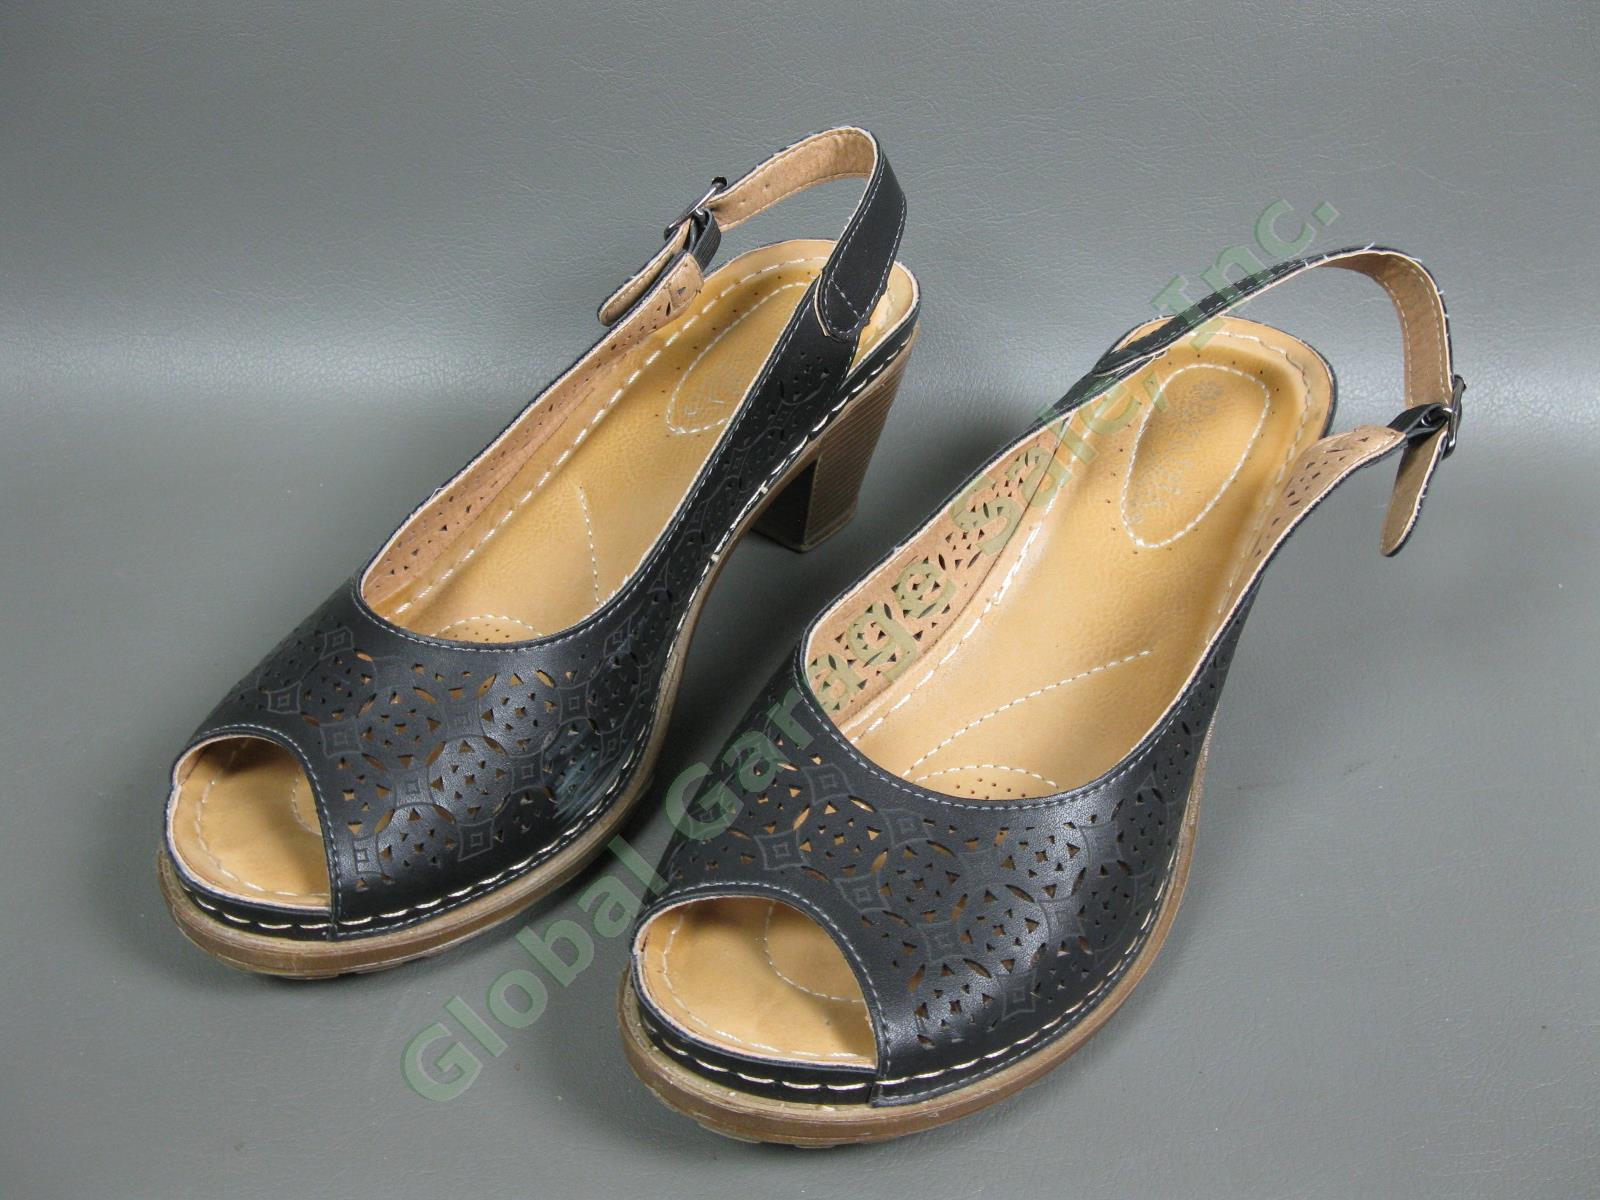 7 Pair Womens Leather Canvas Summer Sandal High Heel Size 6-10 Dress Shoe Lot 6